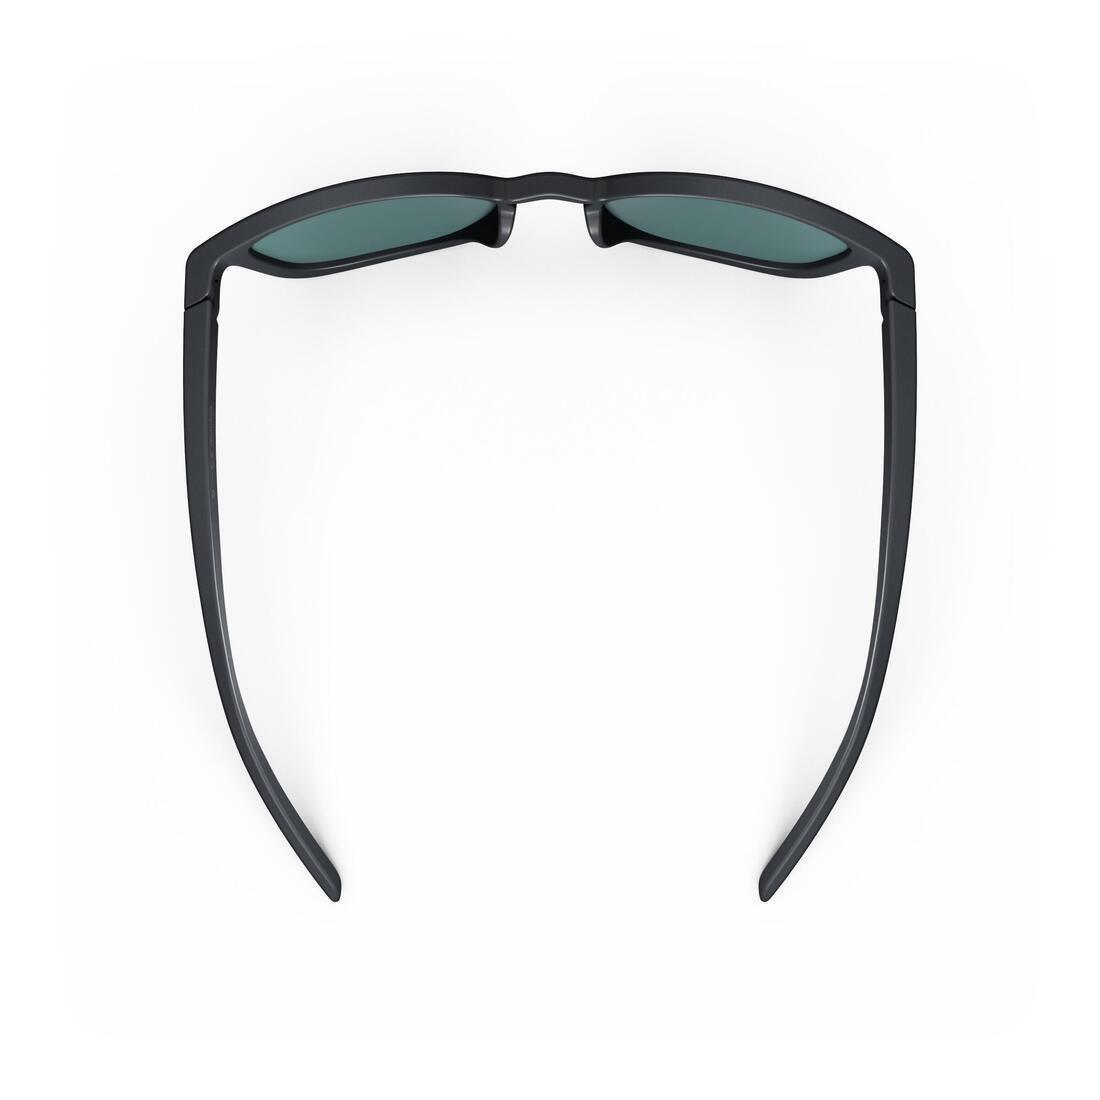 QUECHUA - Adult Unisex Polarised Hiking Sunglasses Category 3 Mh160, Black